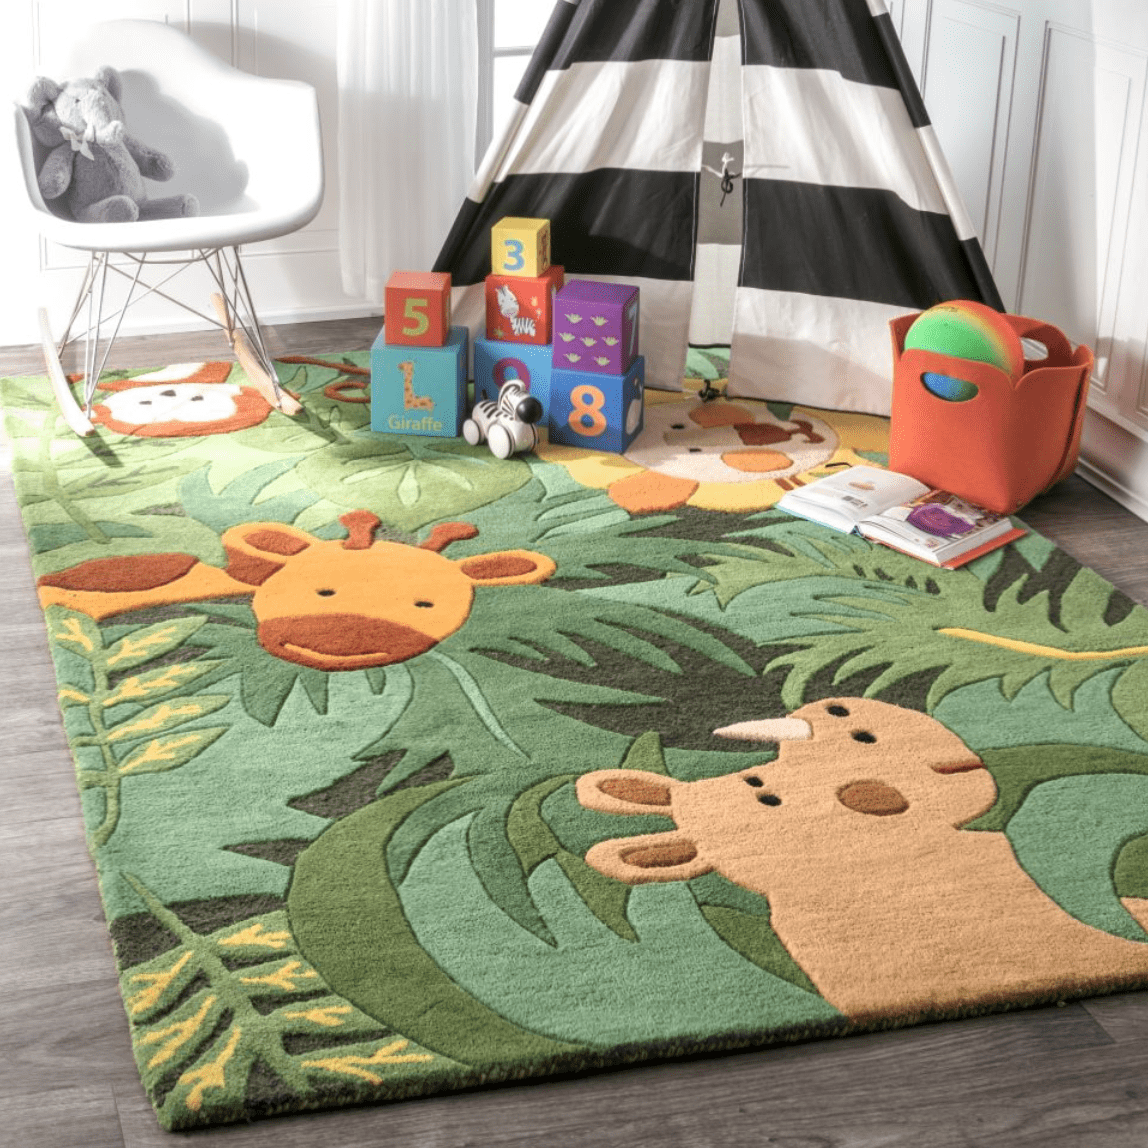 Long Floor Mats Carpets Kids Room Cartoon Style Cute Carpets Soft Long Carpet for Bedroom Living Room Area Rug Home Decoration